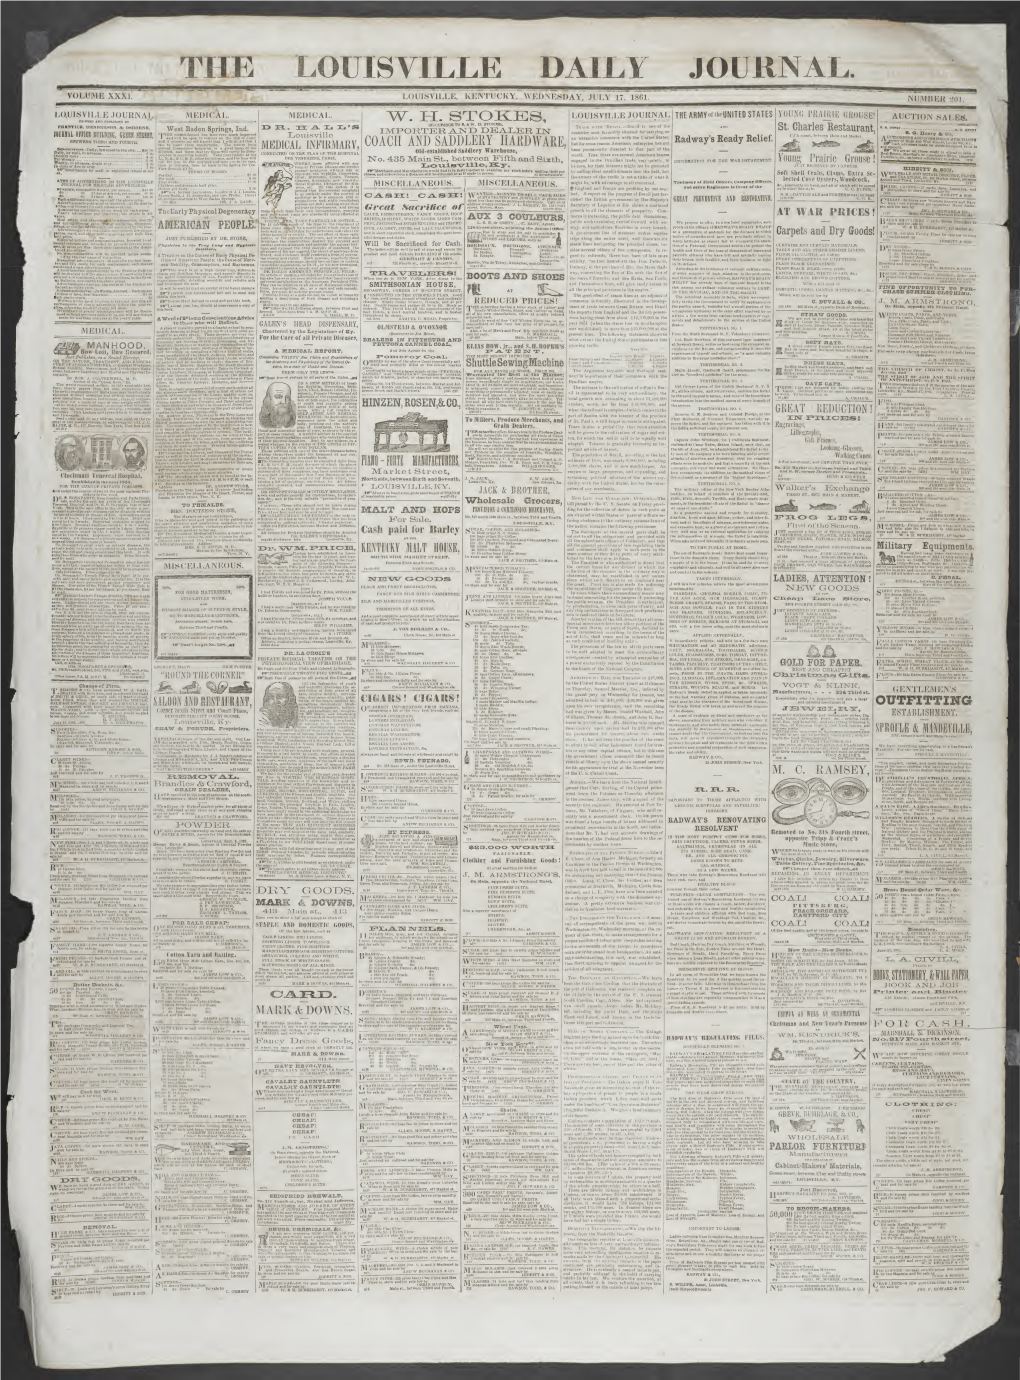 Louisville Daily Journal (Louisville, Ky. : 1833): 1861-07-17